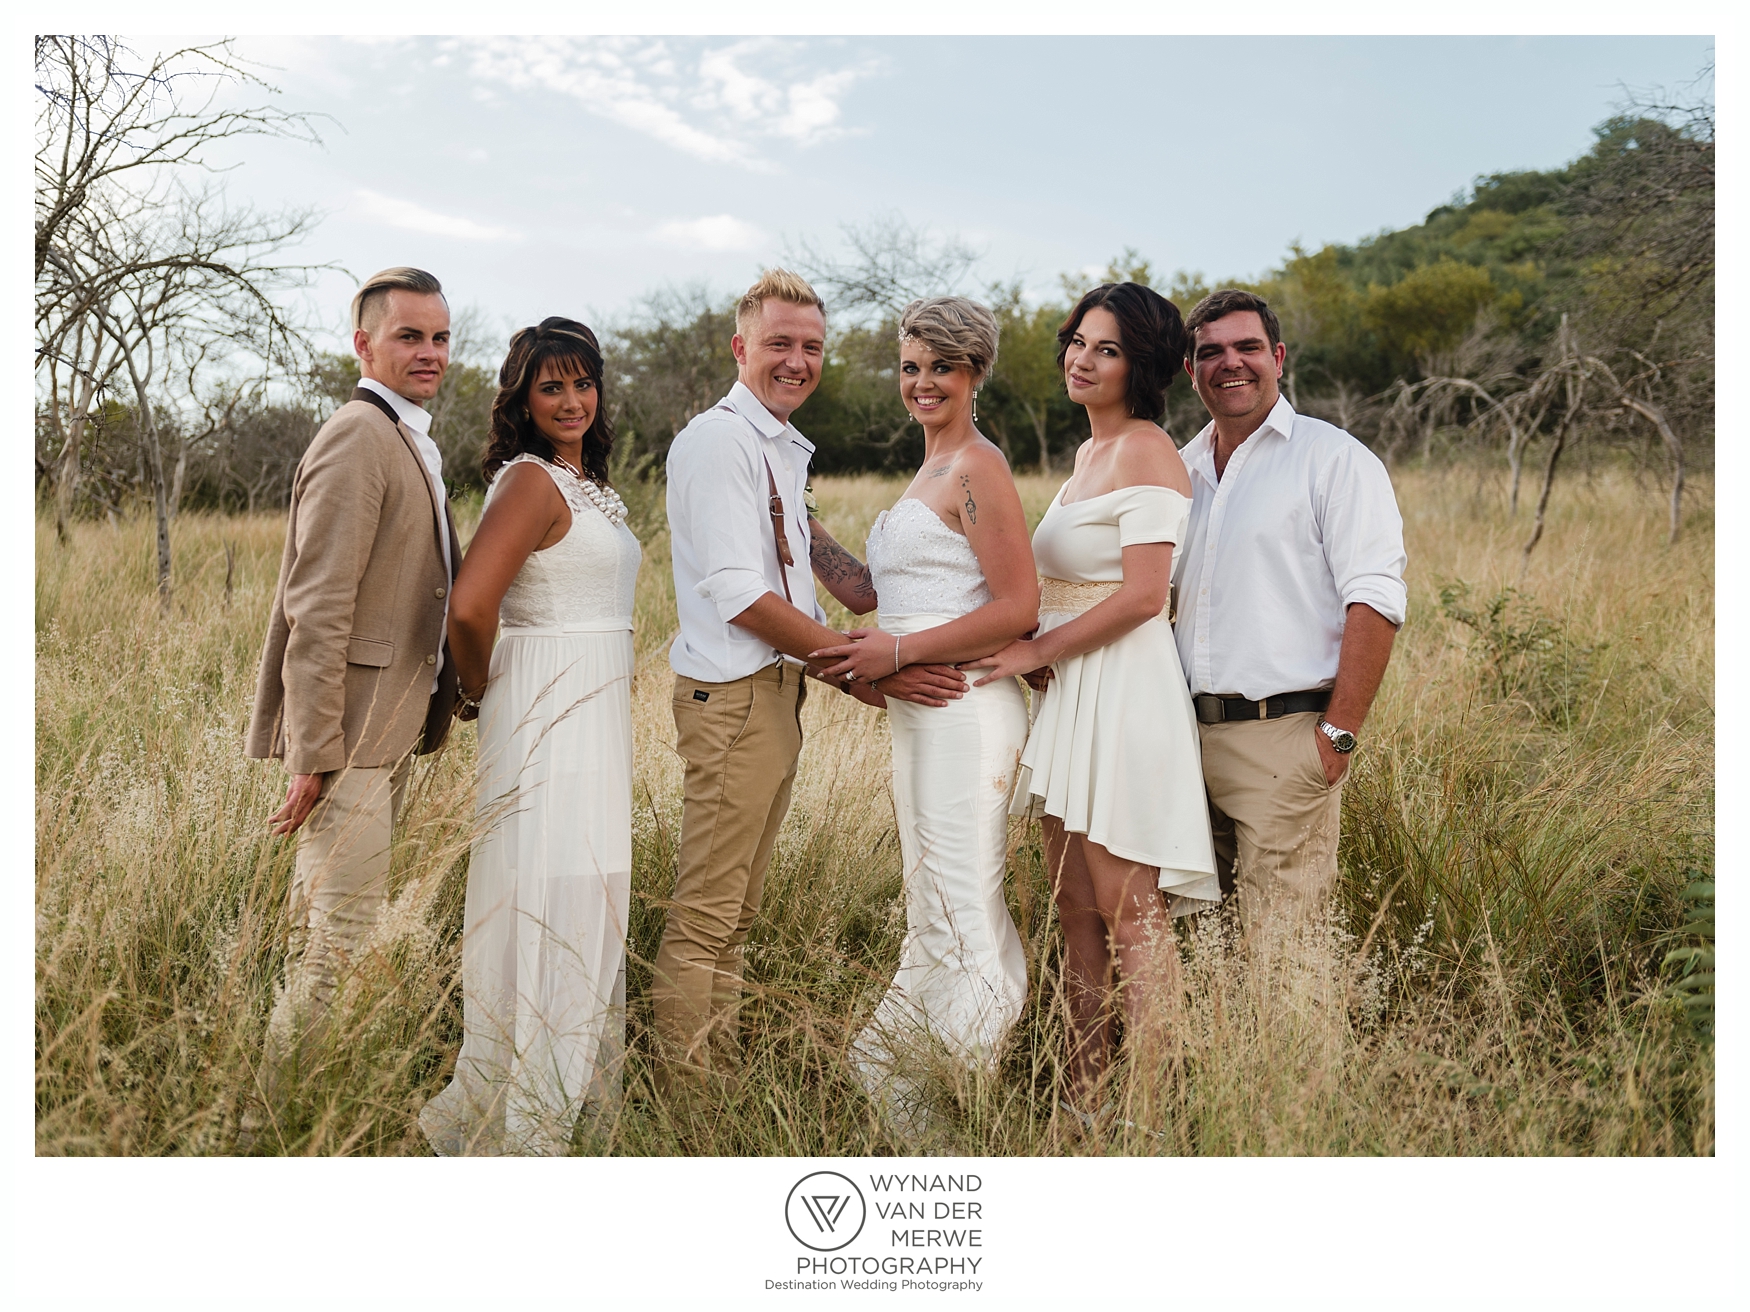 WynandvanderMerwe_weddingphotography_bushveldwedding_northam_bushveld_limpopowedding_limpopo_southafrica-174.jpg